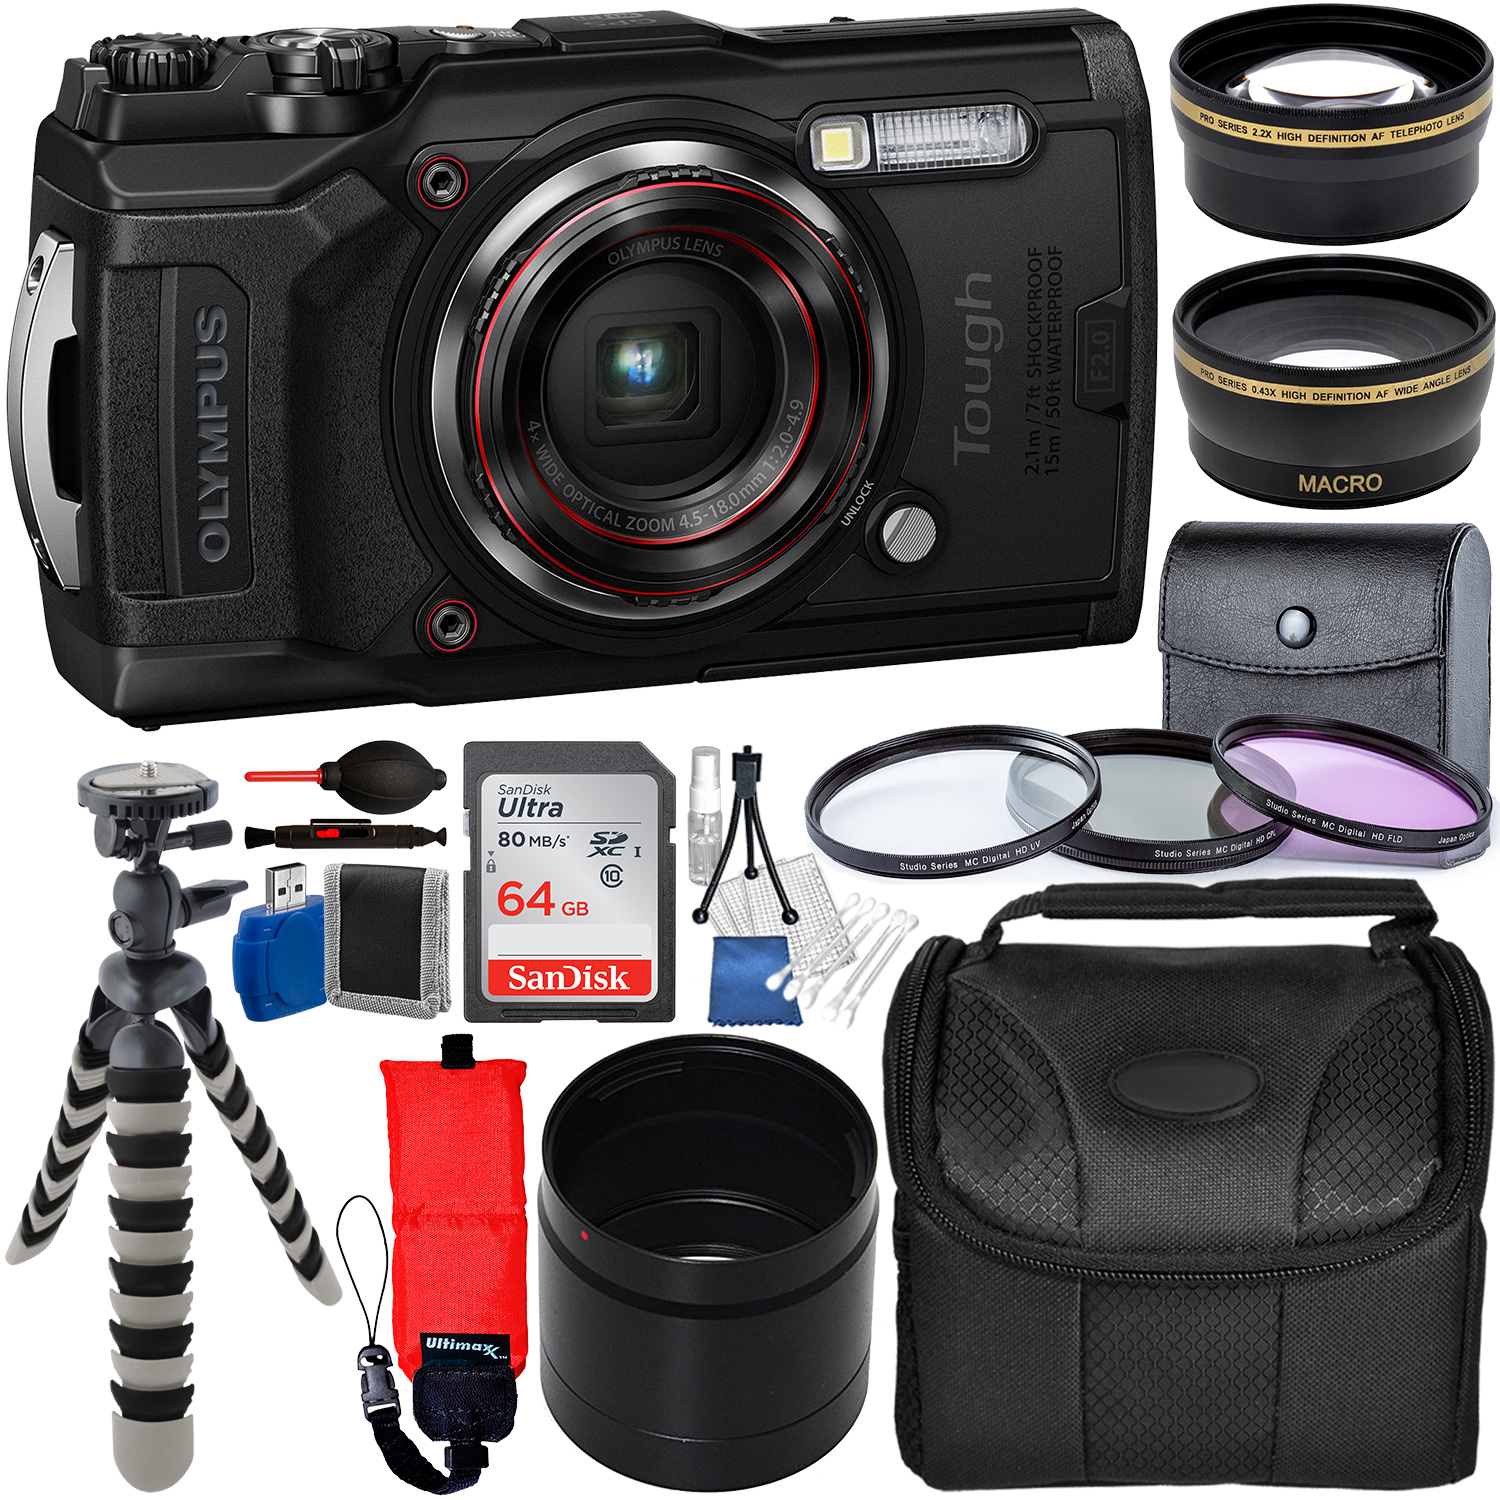 Olympus Tough TG-6 Digital Camera (Black) - V104210BU000 with Deluxe Accessory Bundle